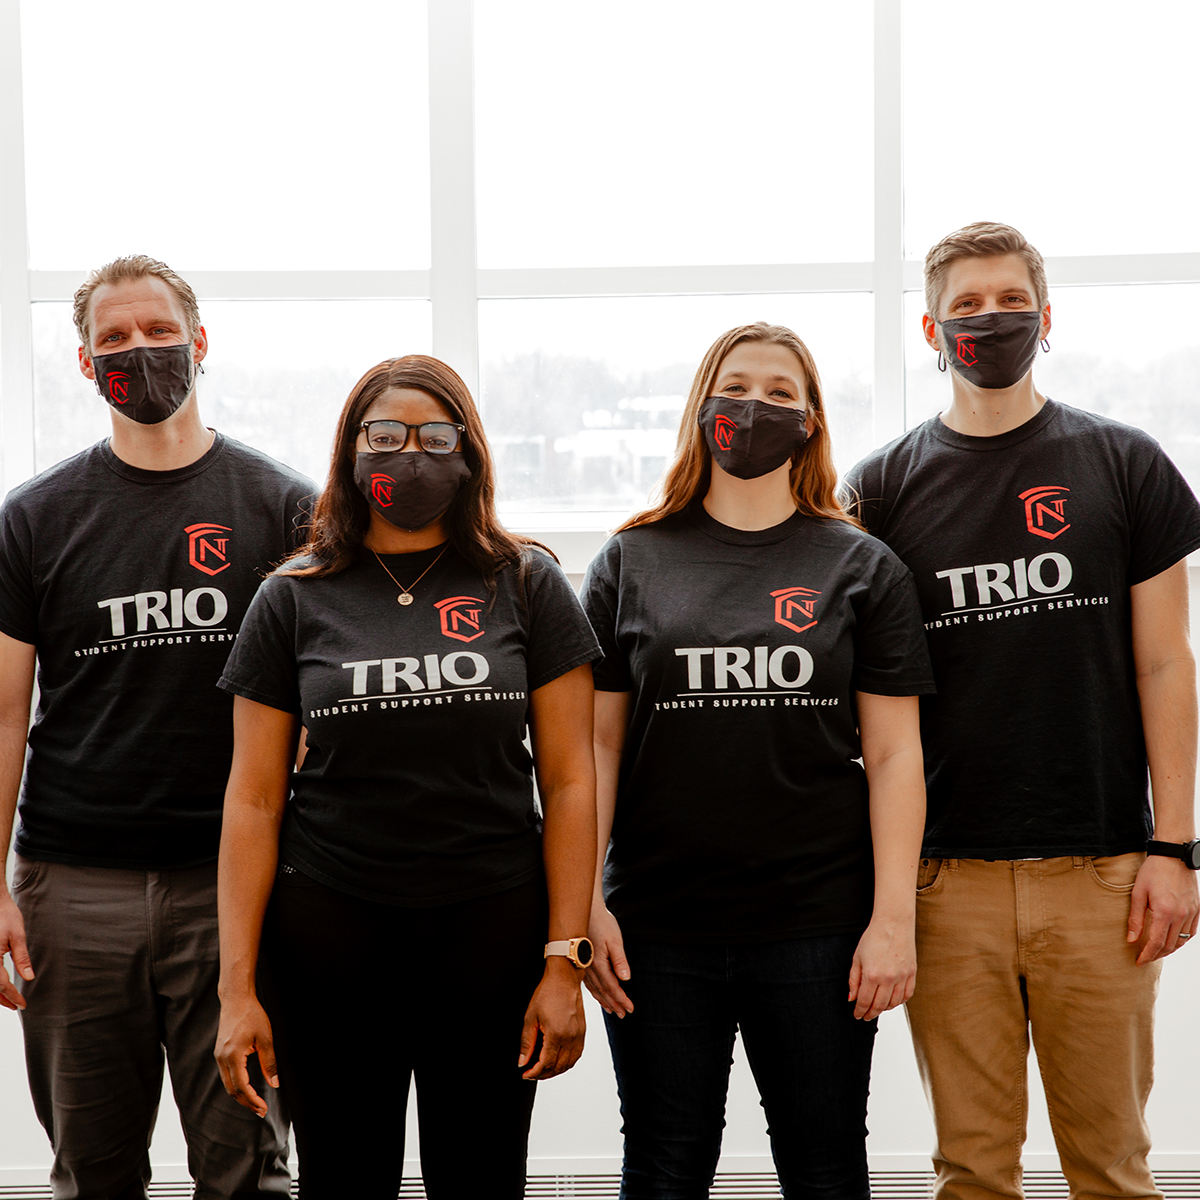 TRIO Staff members